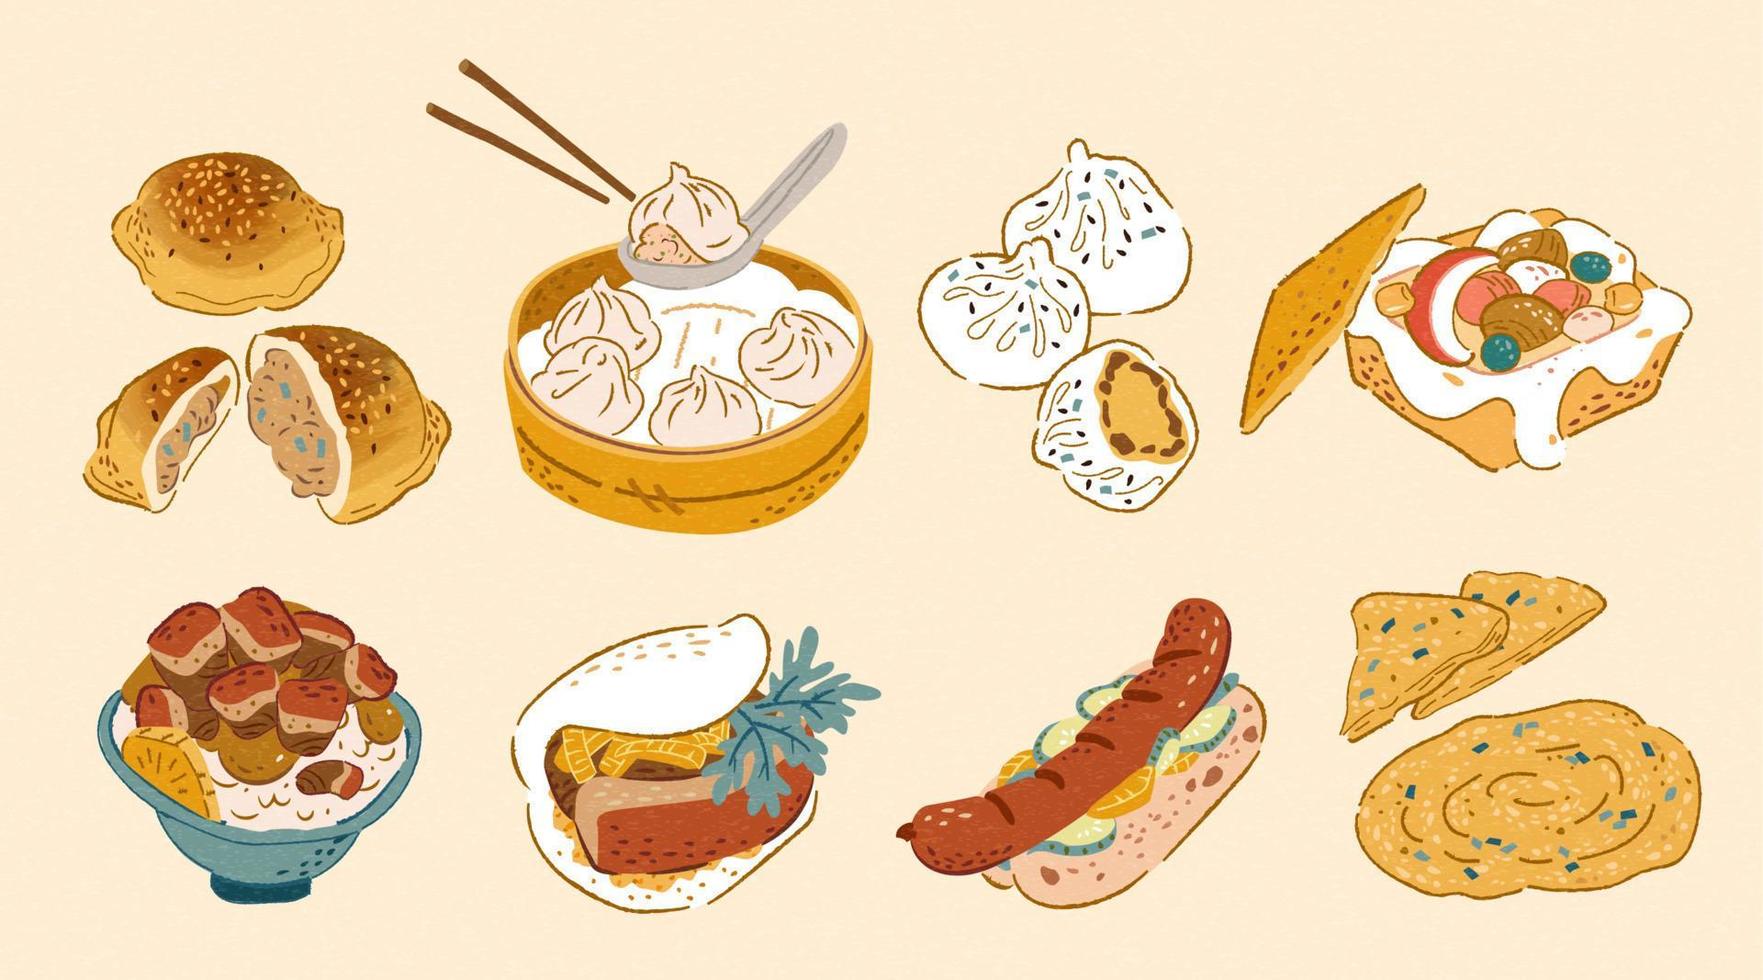 Taiwan straat voedsel verzameling in tekening ontwerp, inclusief peper broodjes, Ciao lang bah, gebakken broodje, lijkkist brood, gestoofd varkensvlees rijst, gua bah, worst met kleverig rijst, en lente-ui taart. vector